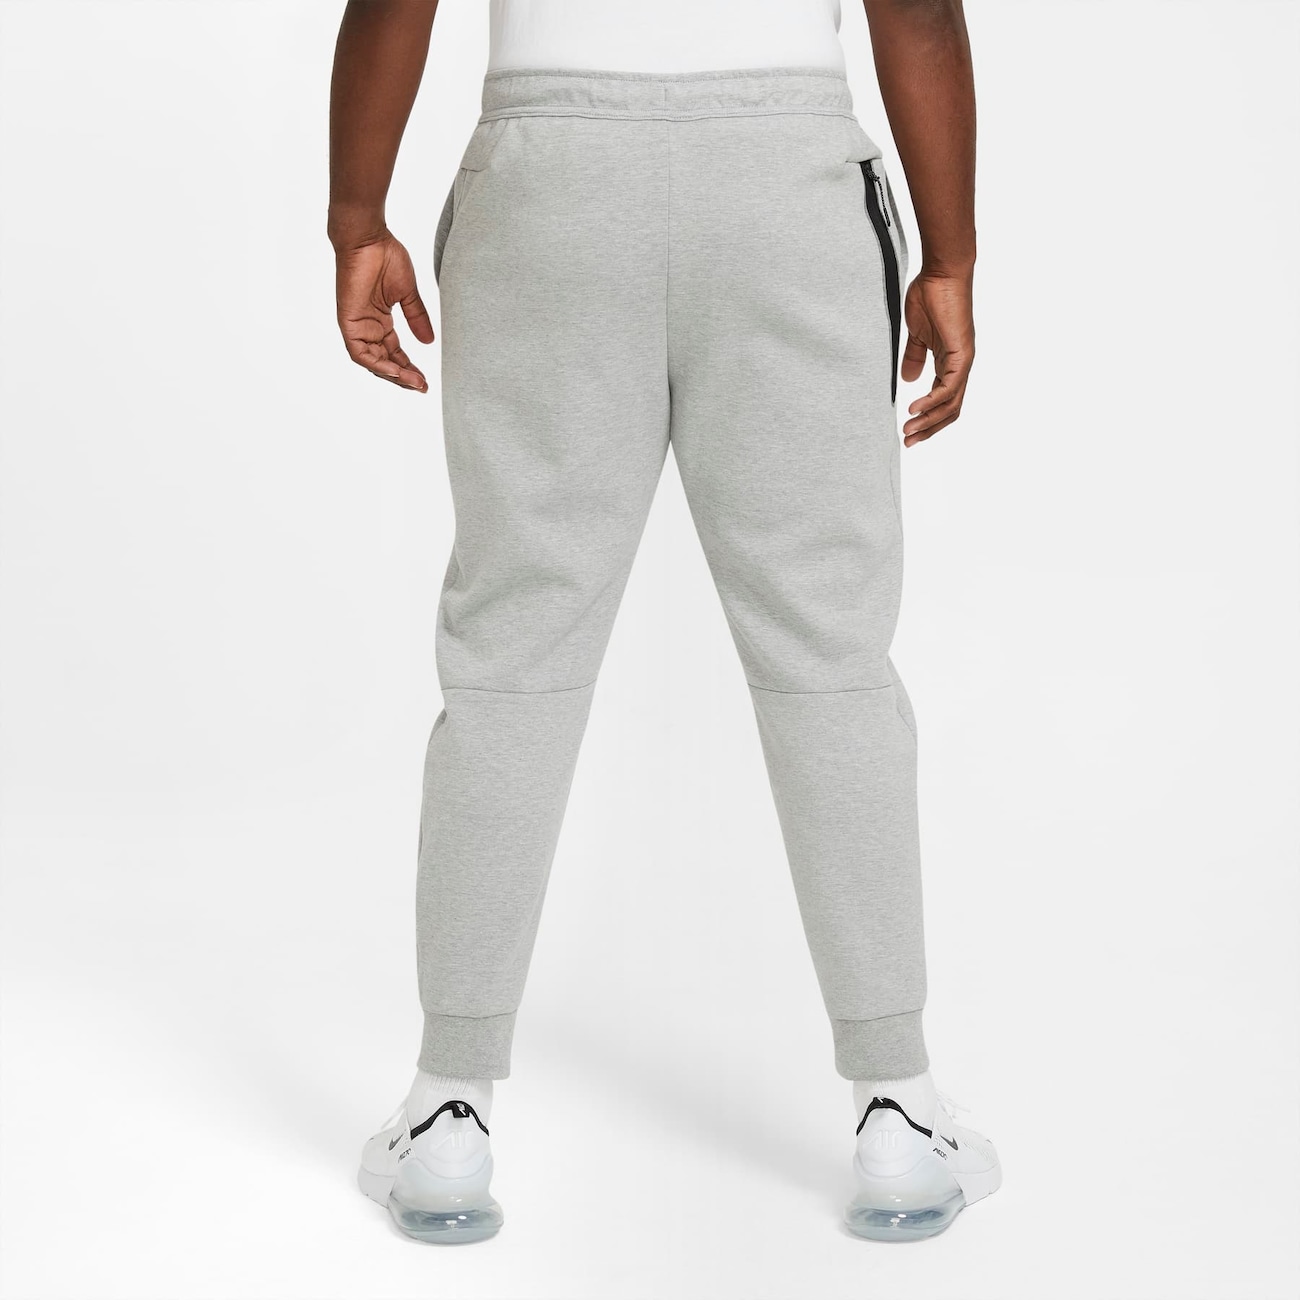 Calça Nike Sportswear Tech Fleece Masculina - Foto 16